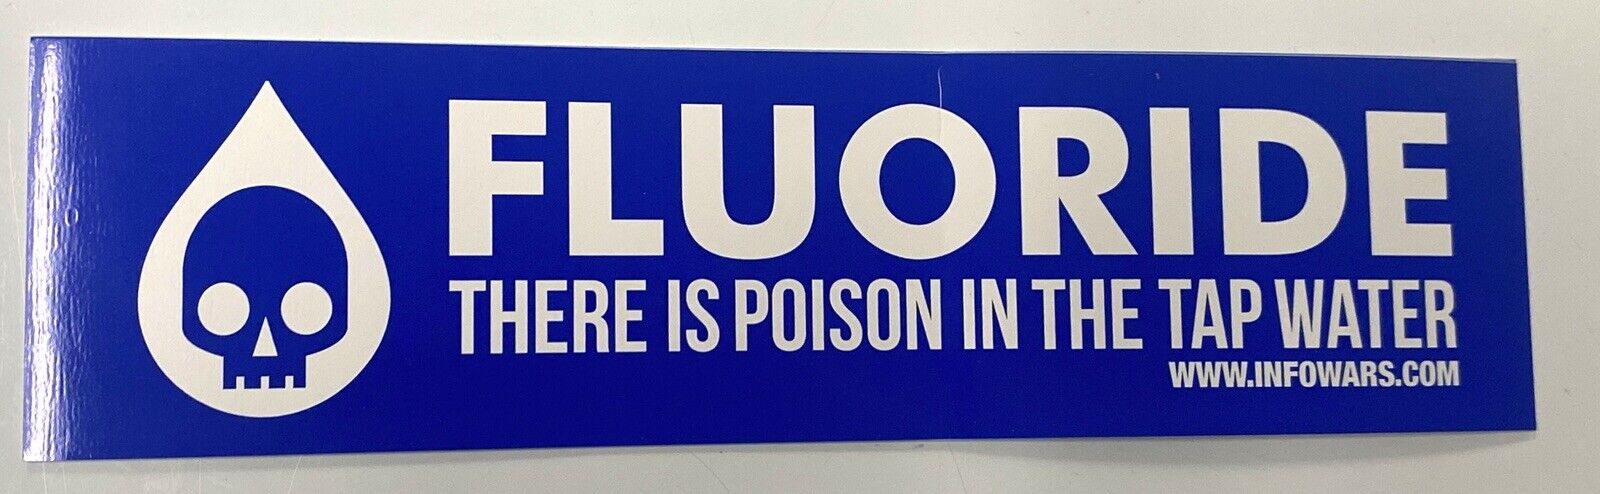 infowars.com FLUORIDE BUMPER STICKER. Poison In The Tap Water. Blue/white🔥